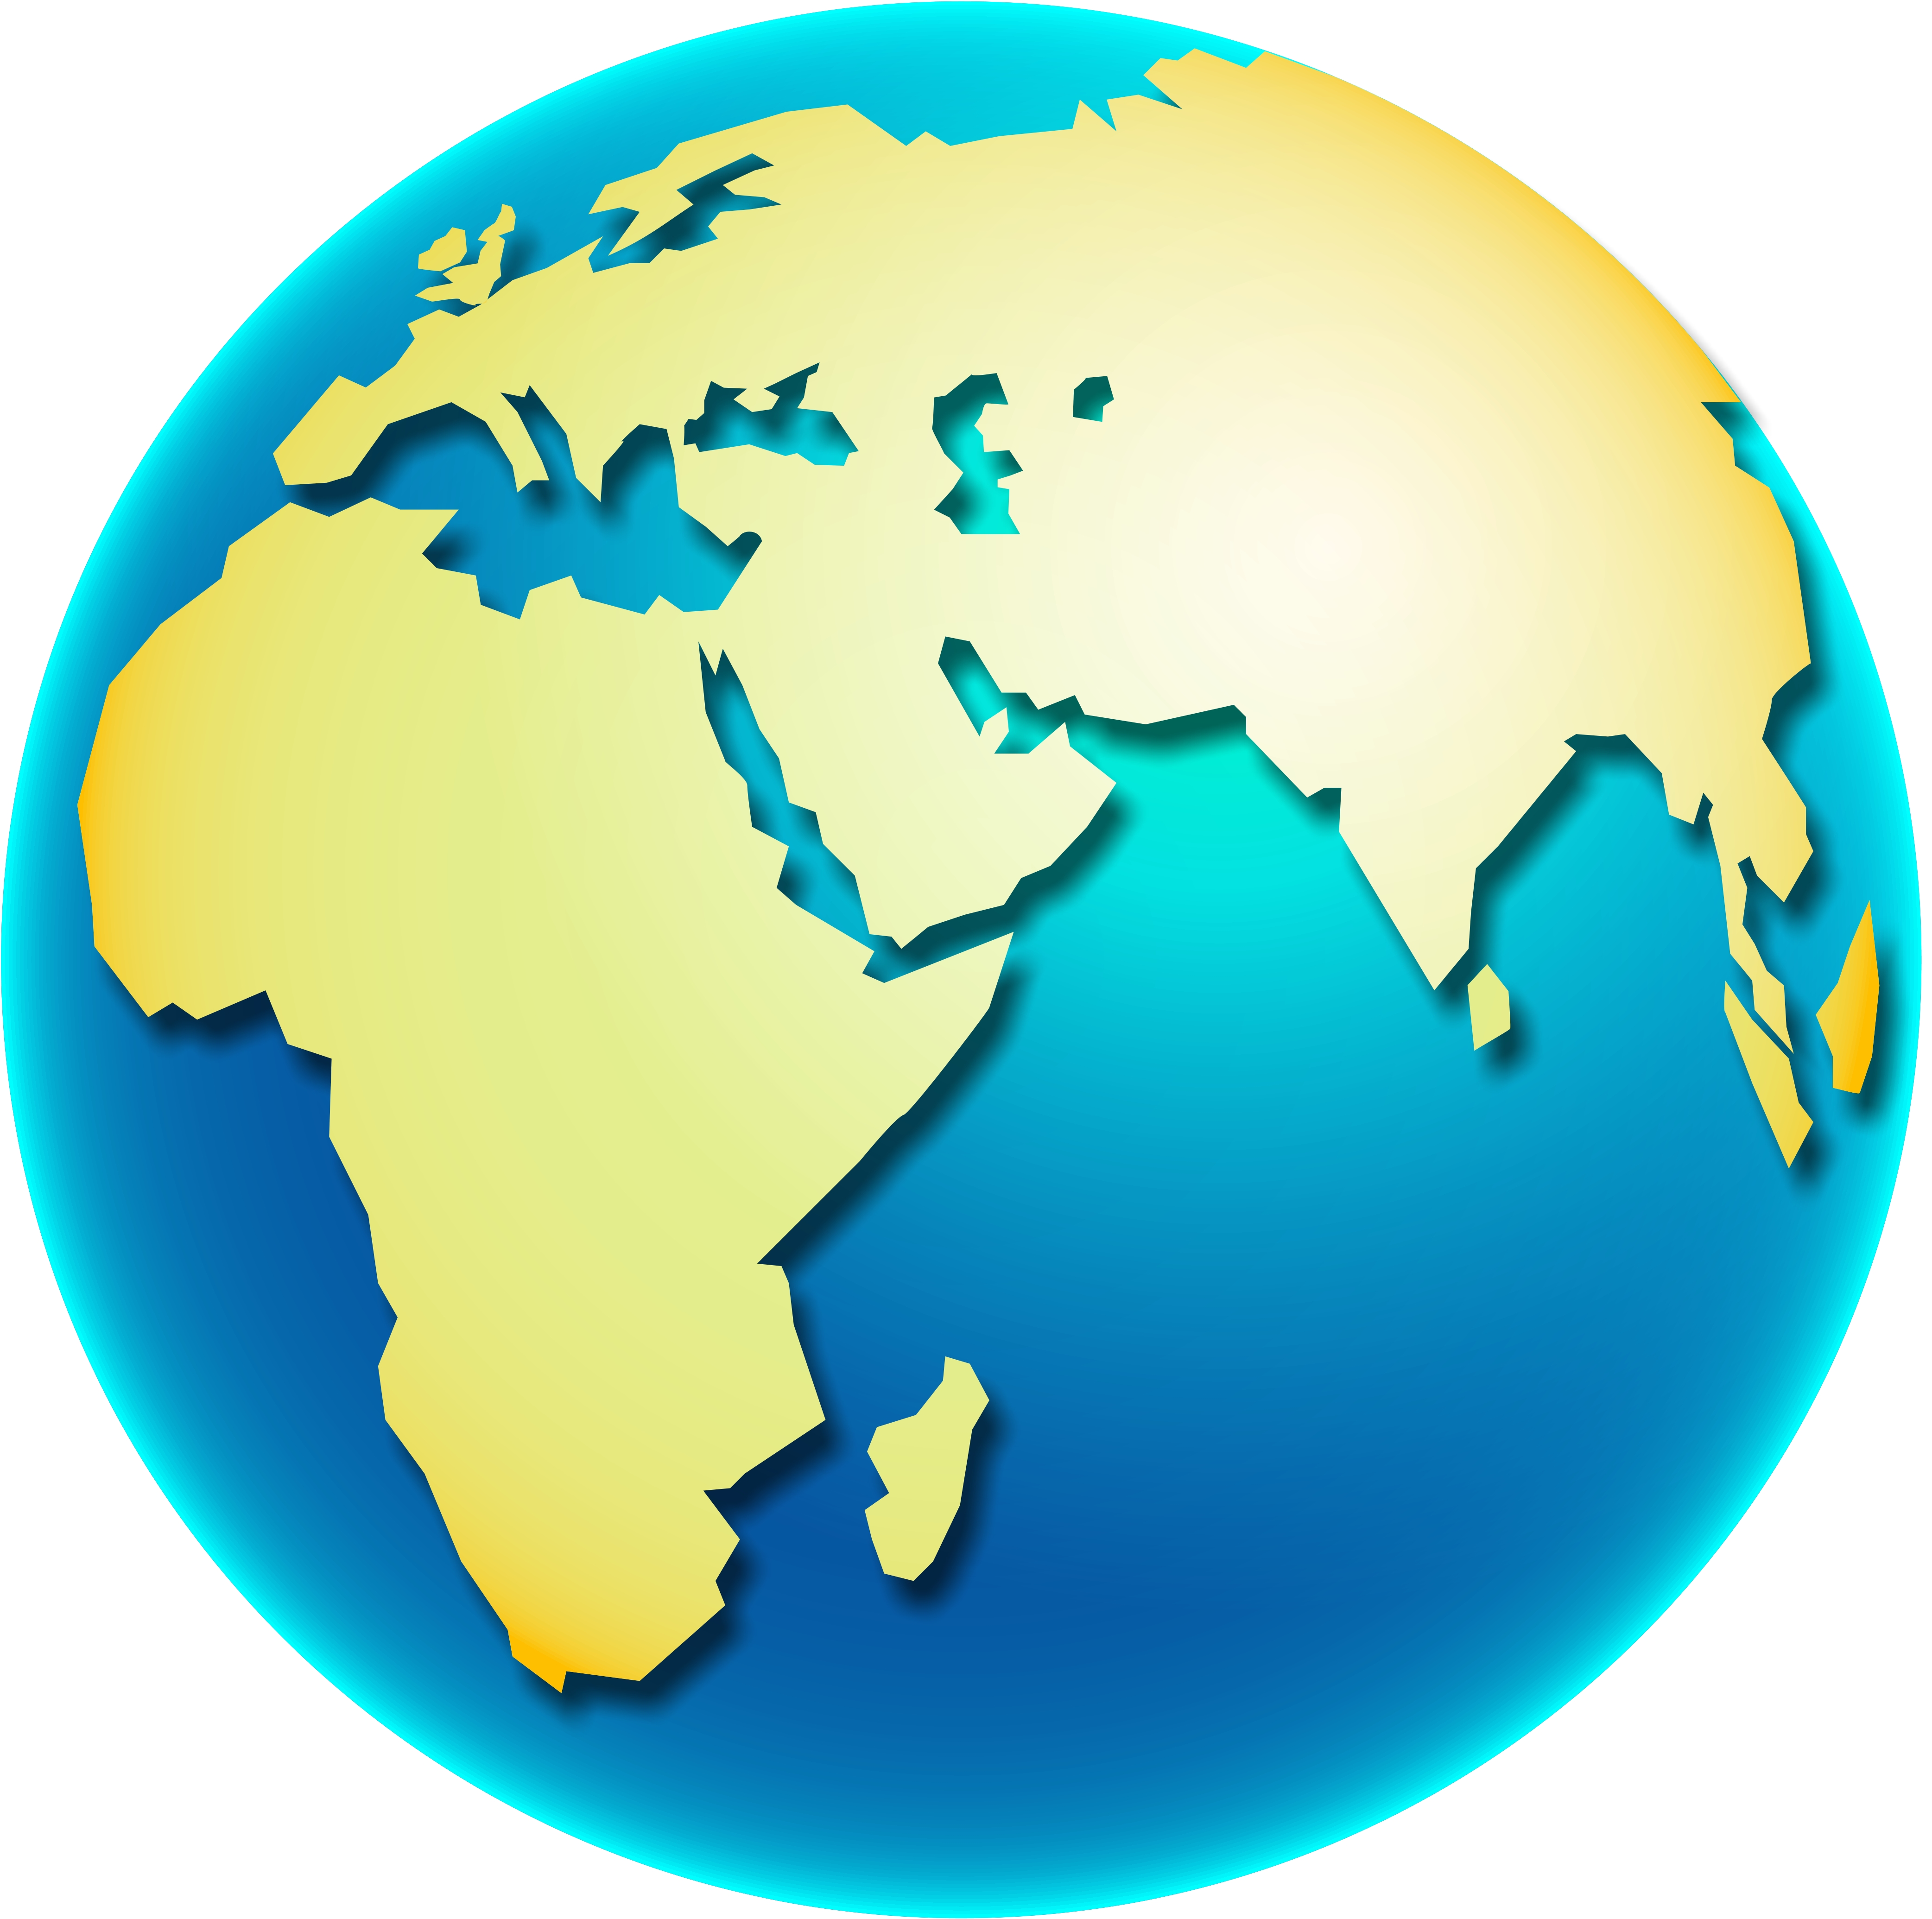 Карта материков на глобусе. Земной шар. Глобус земли. Евразия на глобусе. Континенты на глобусе.